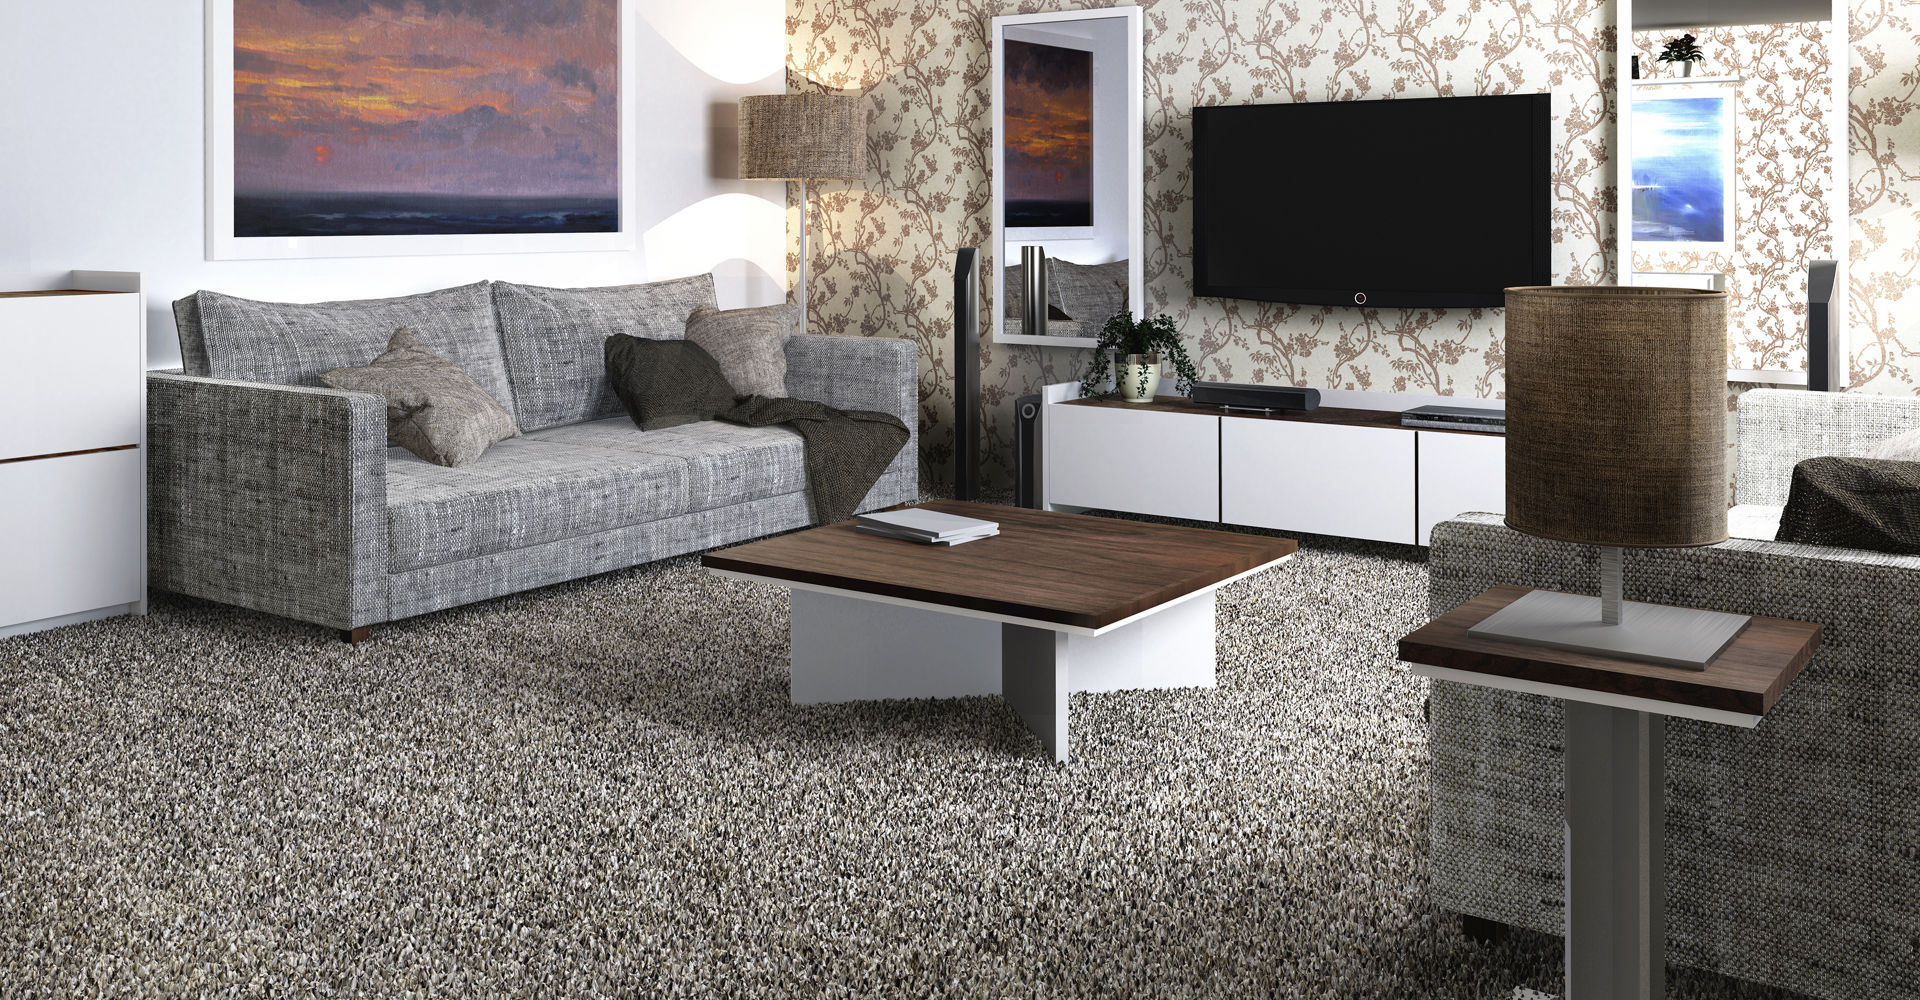 Essentials Walnut & White Living Room Set ft. Low TV & Media Unit, Square Coffee & Side Tables © GillmoreSPACE Ltd